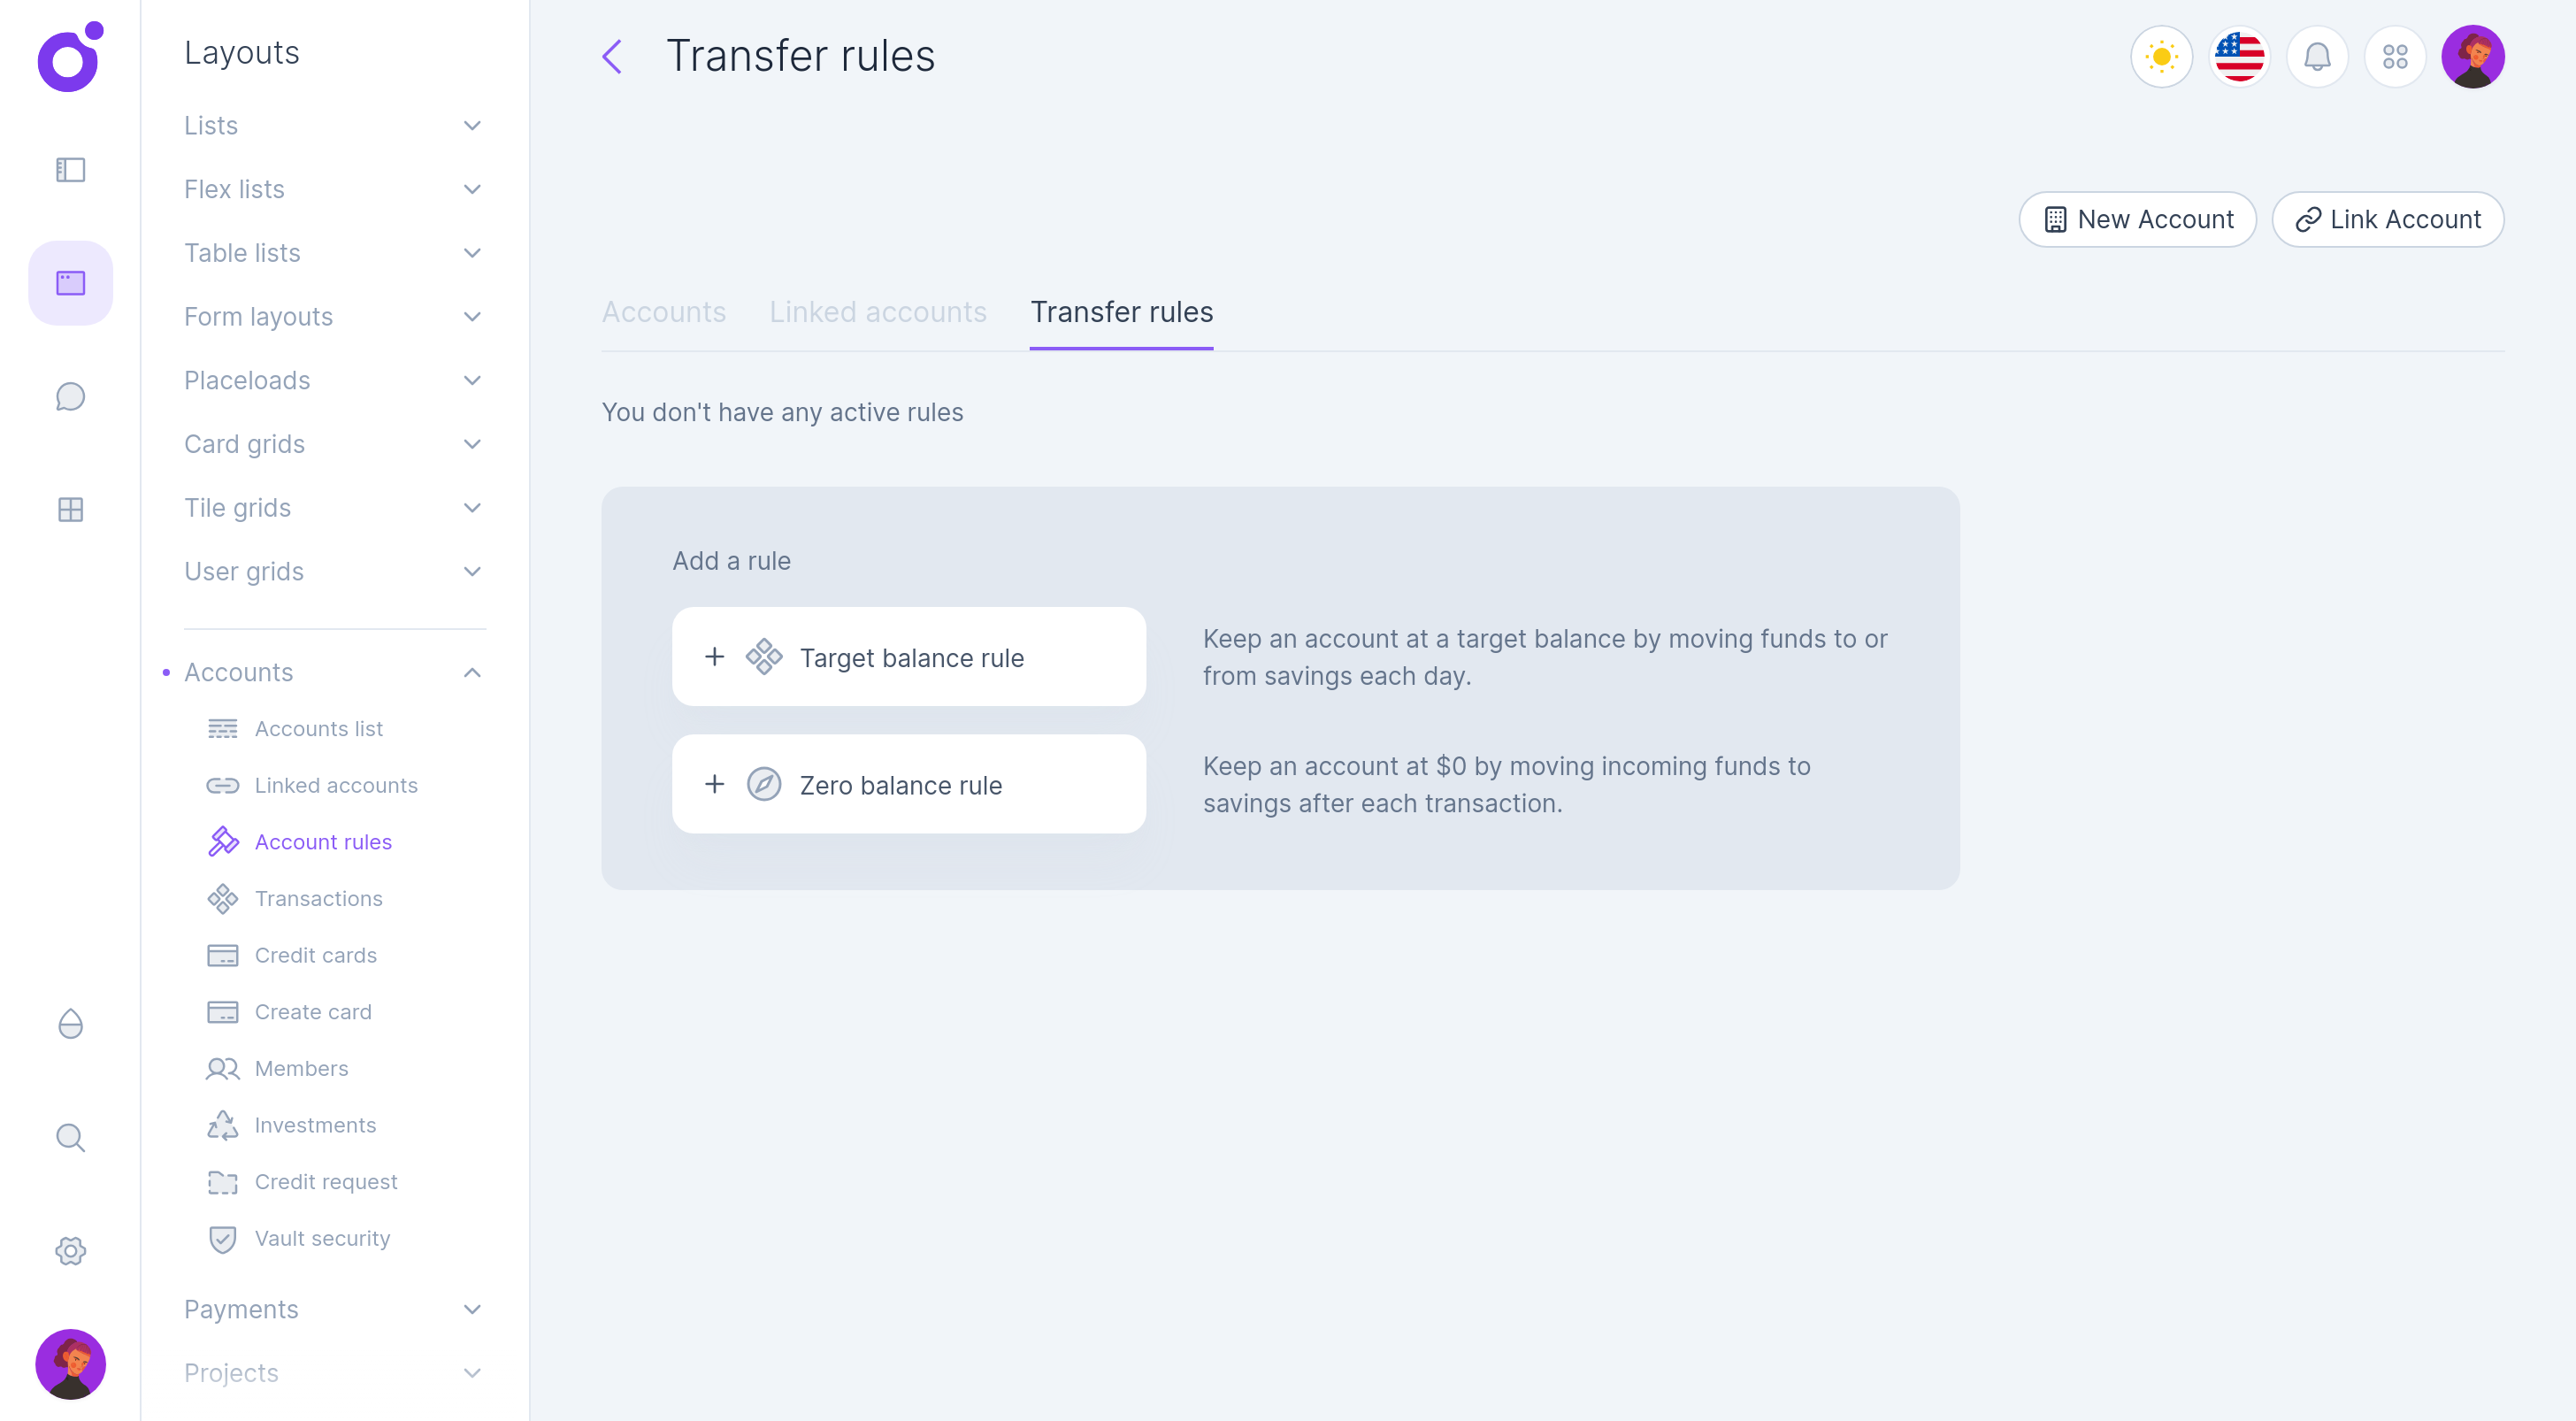 Tairo - Transfer rules